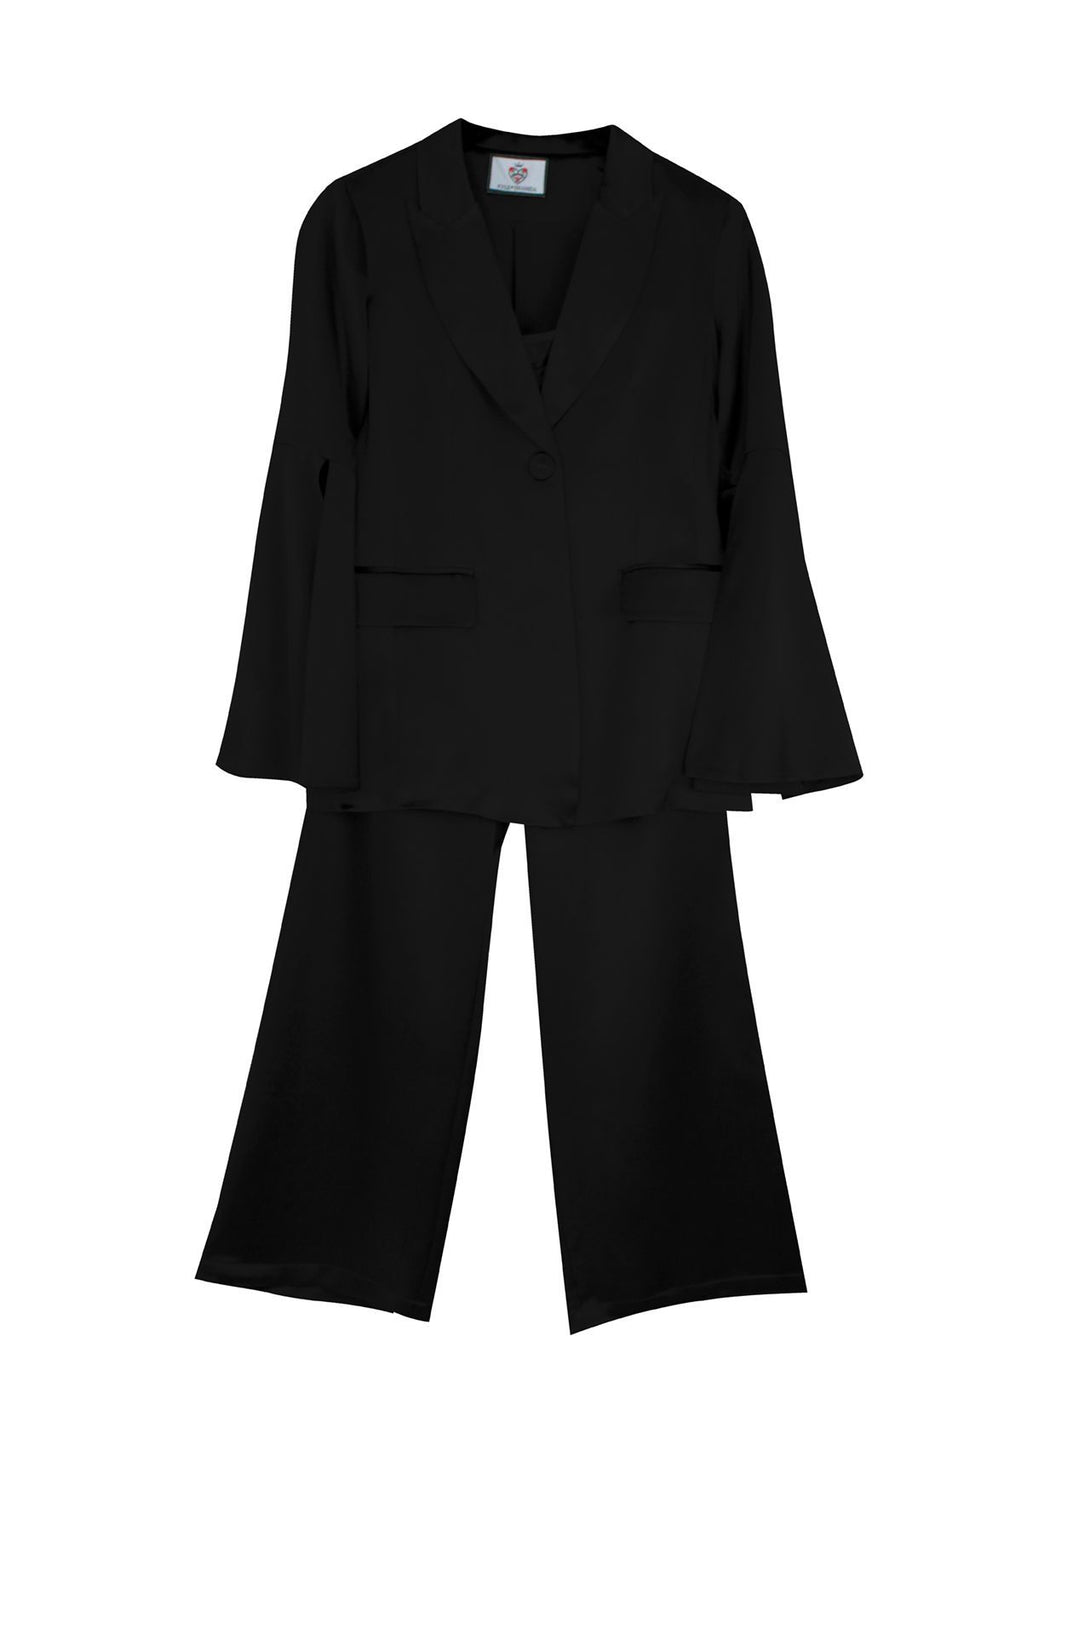 Women-Designer-Black-Suit-By-Kyle-Richards